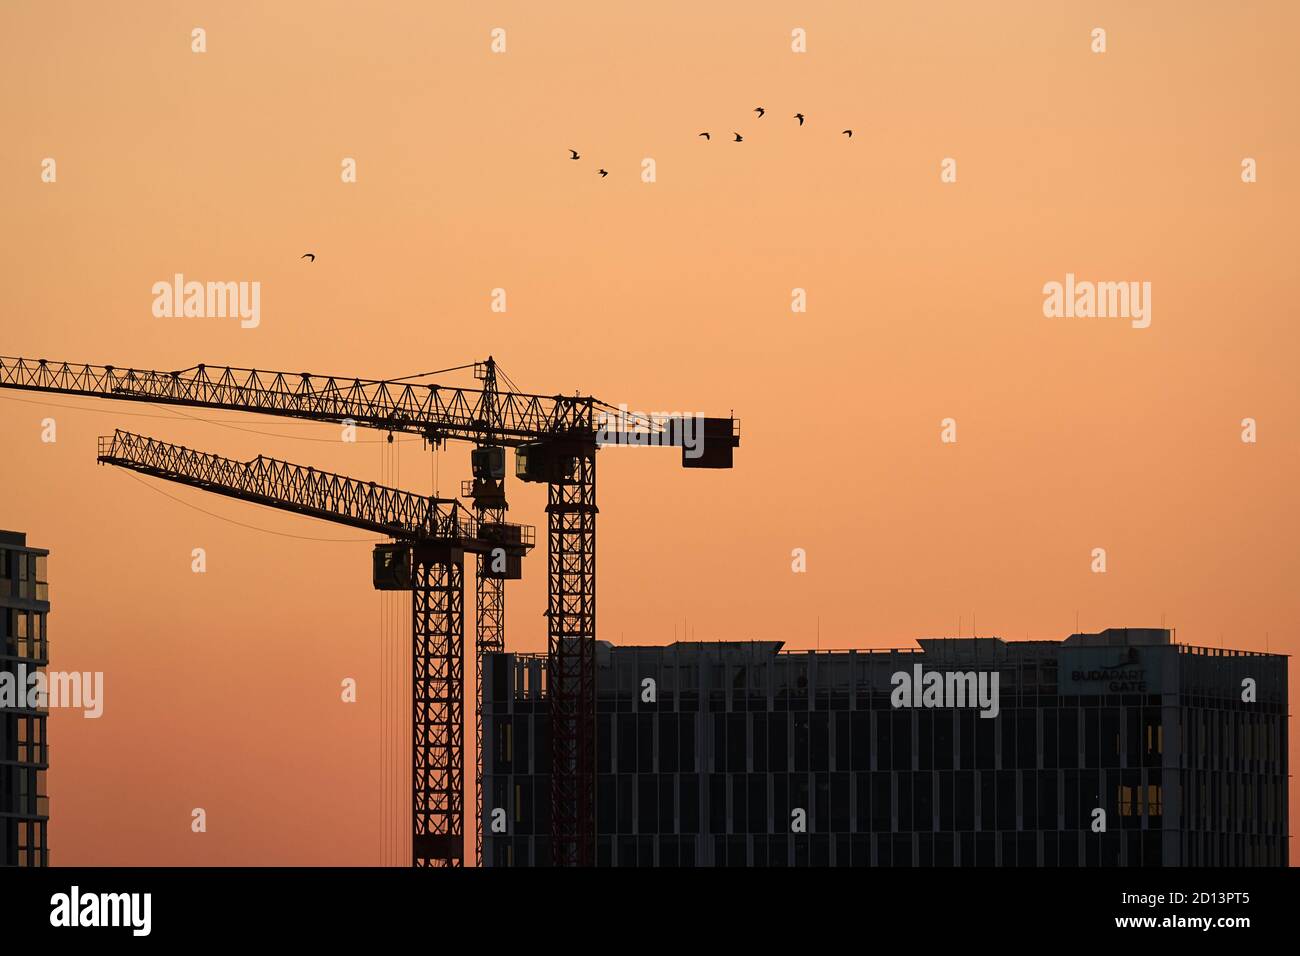 Tall Construction Cranes Stock Photo